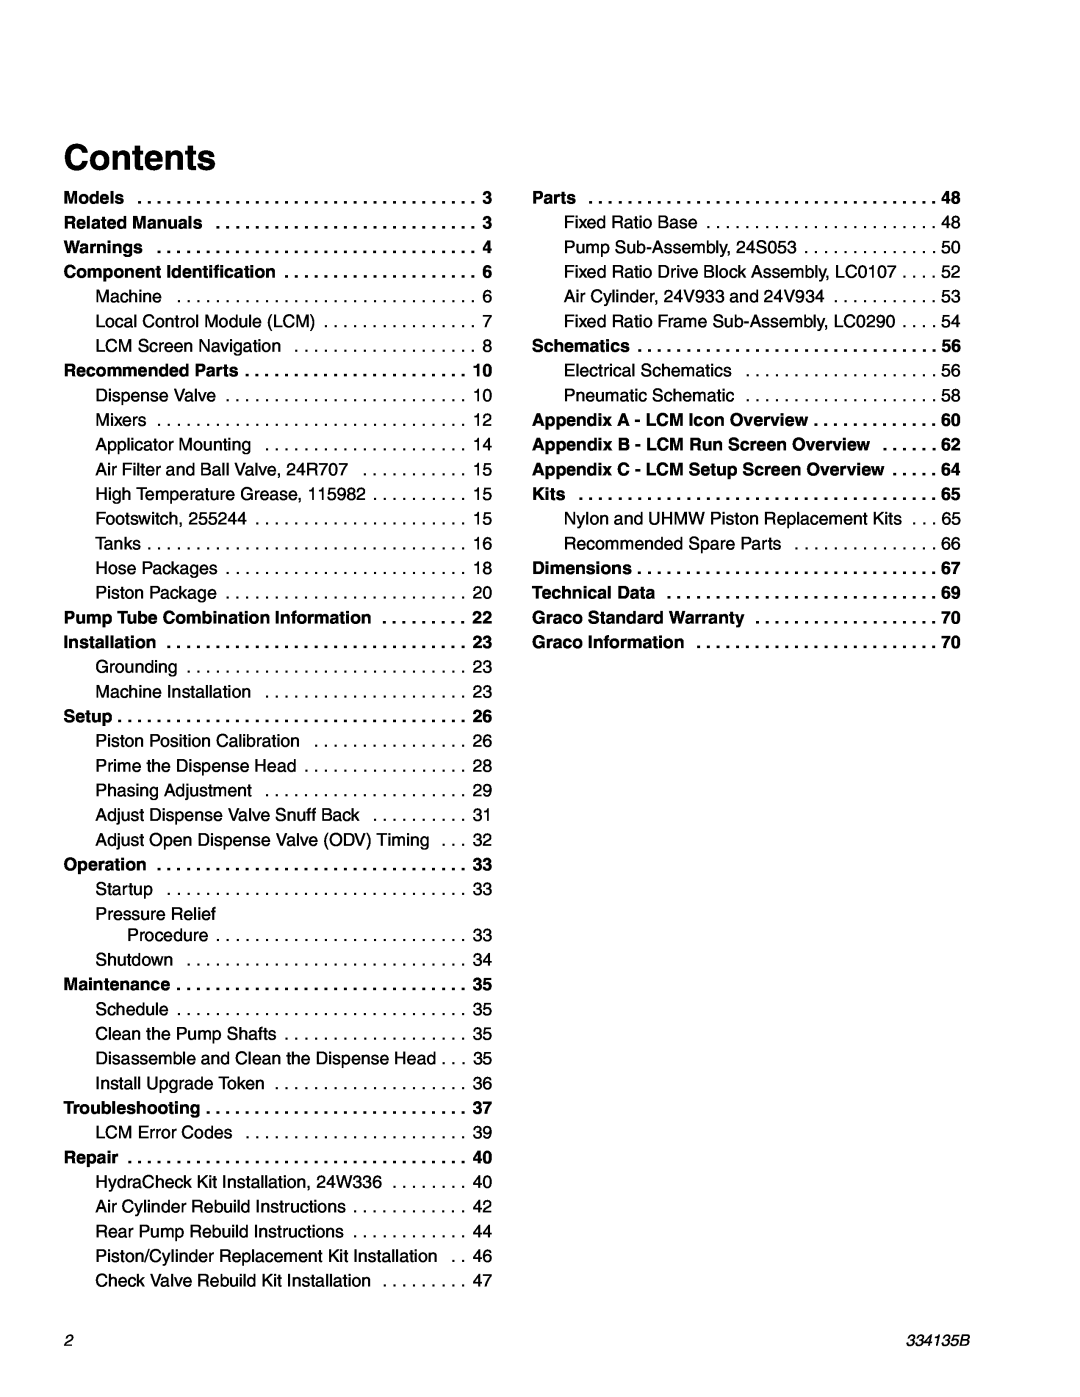 Graco 334135B Contents, Parts, Schematics, Appendix A - LCM Icon Overview, Appendix B - LCM Run Screen Overview, Kits 